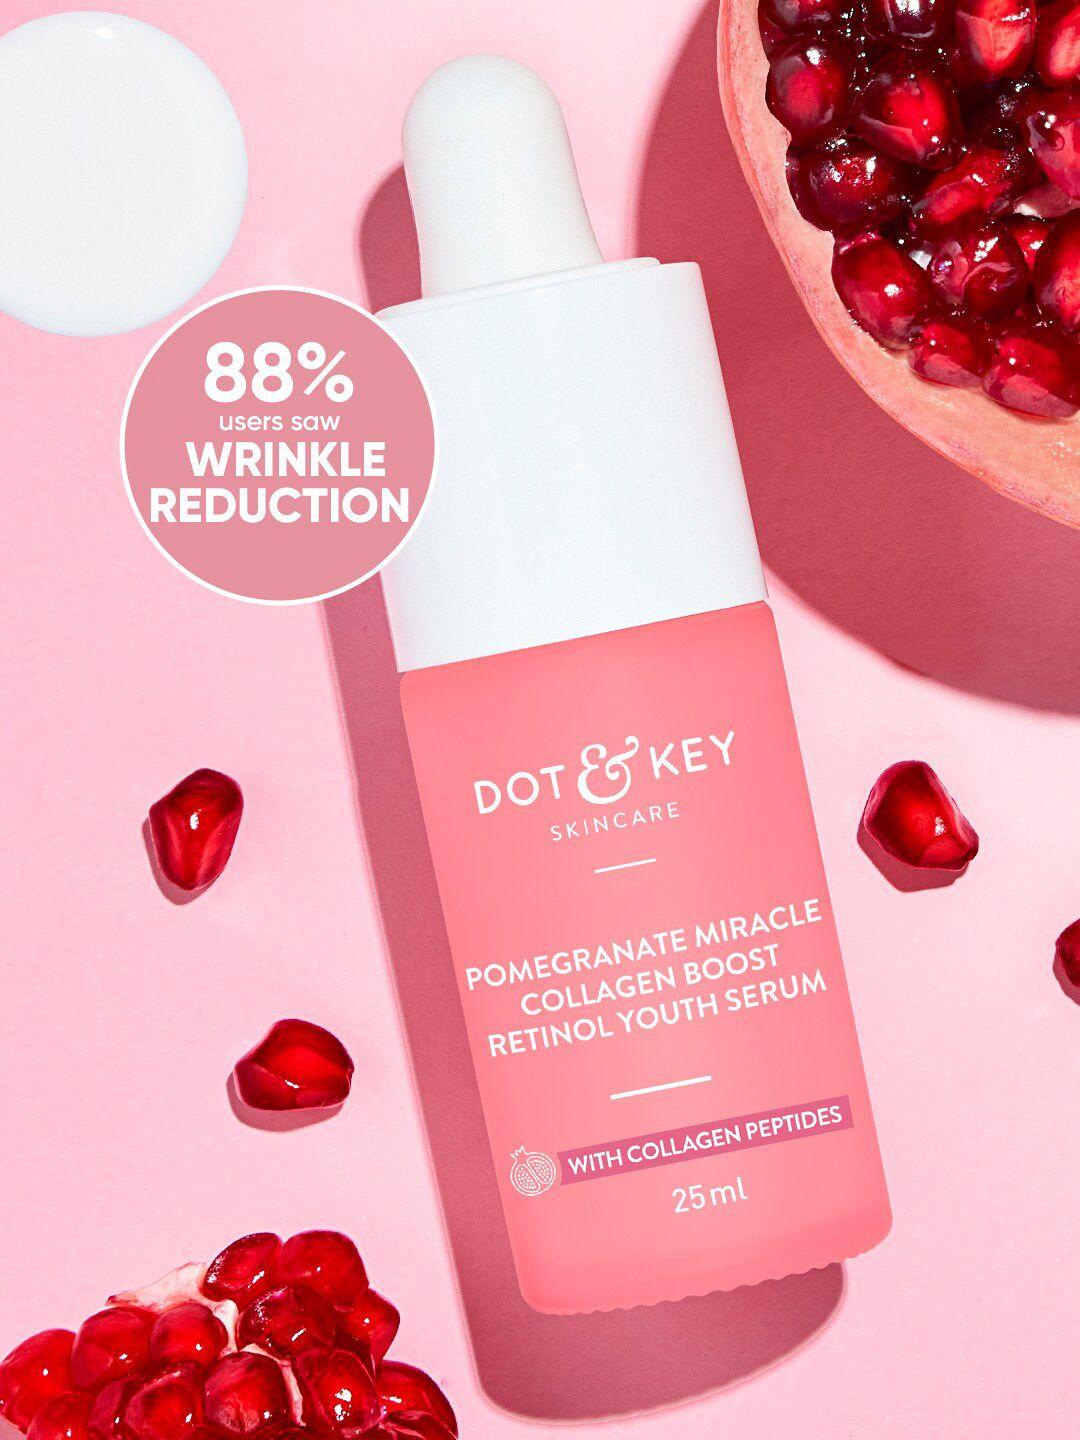 DOT & KEY 0.9% Retinol & Pomegranate Anti-Ageing Face Serum for Fine Line & Wrinkles-25ml